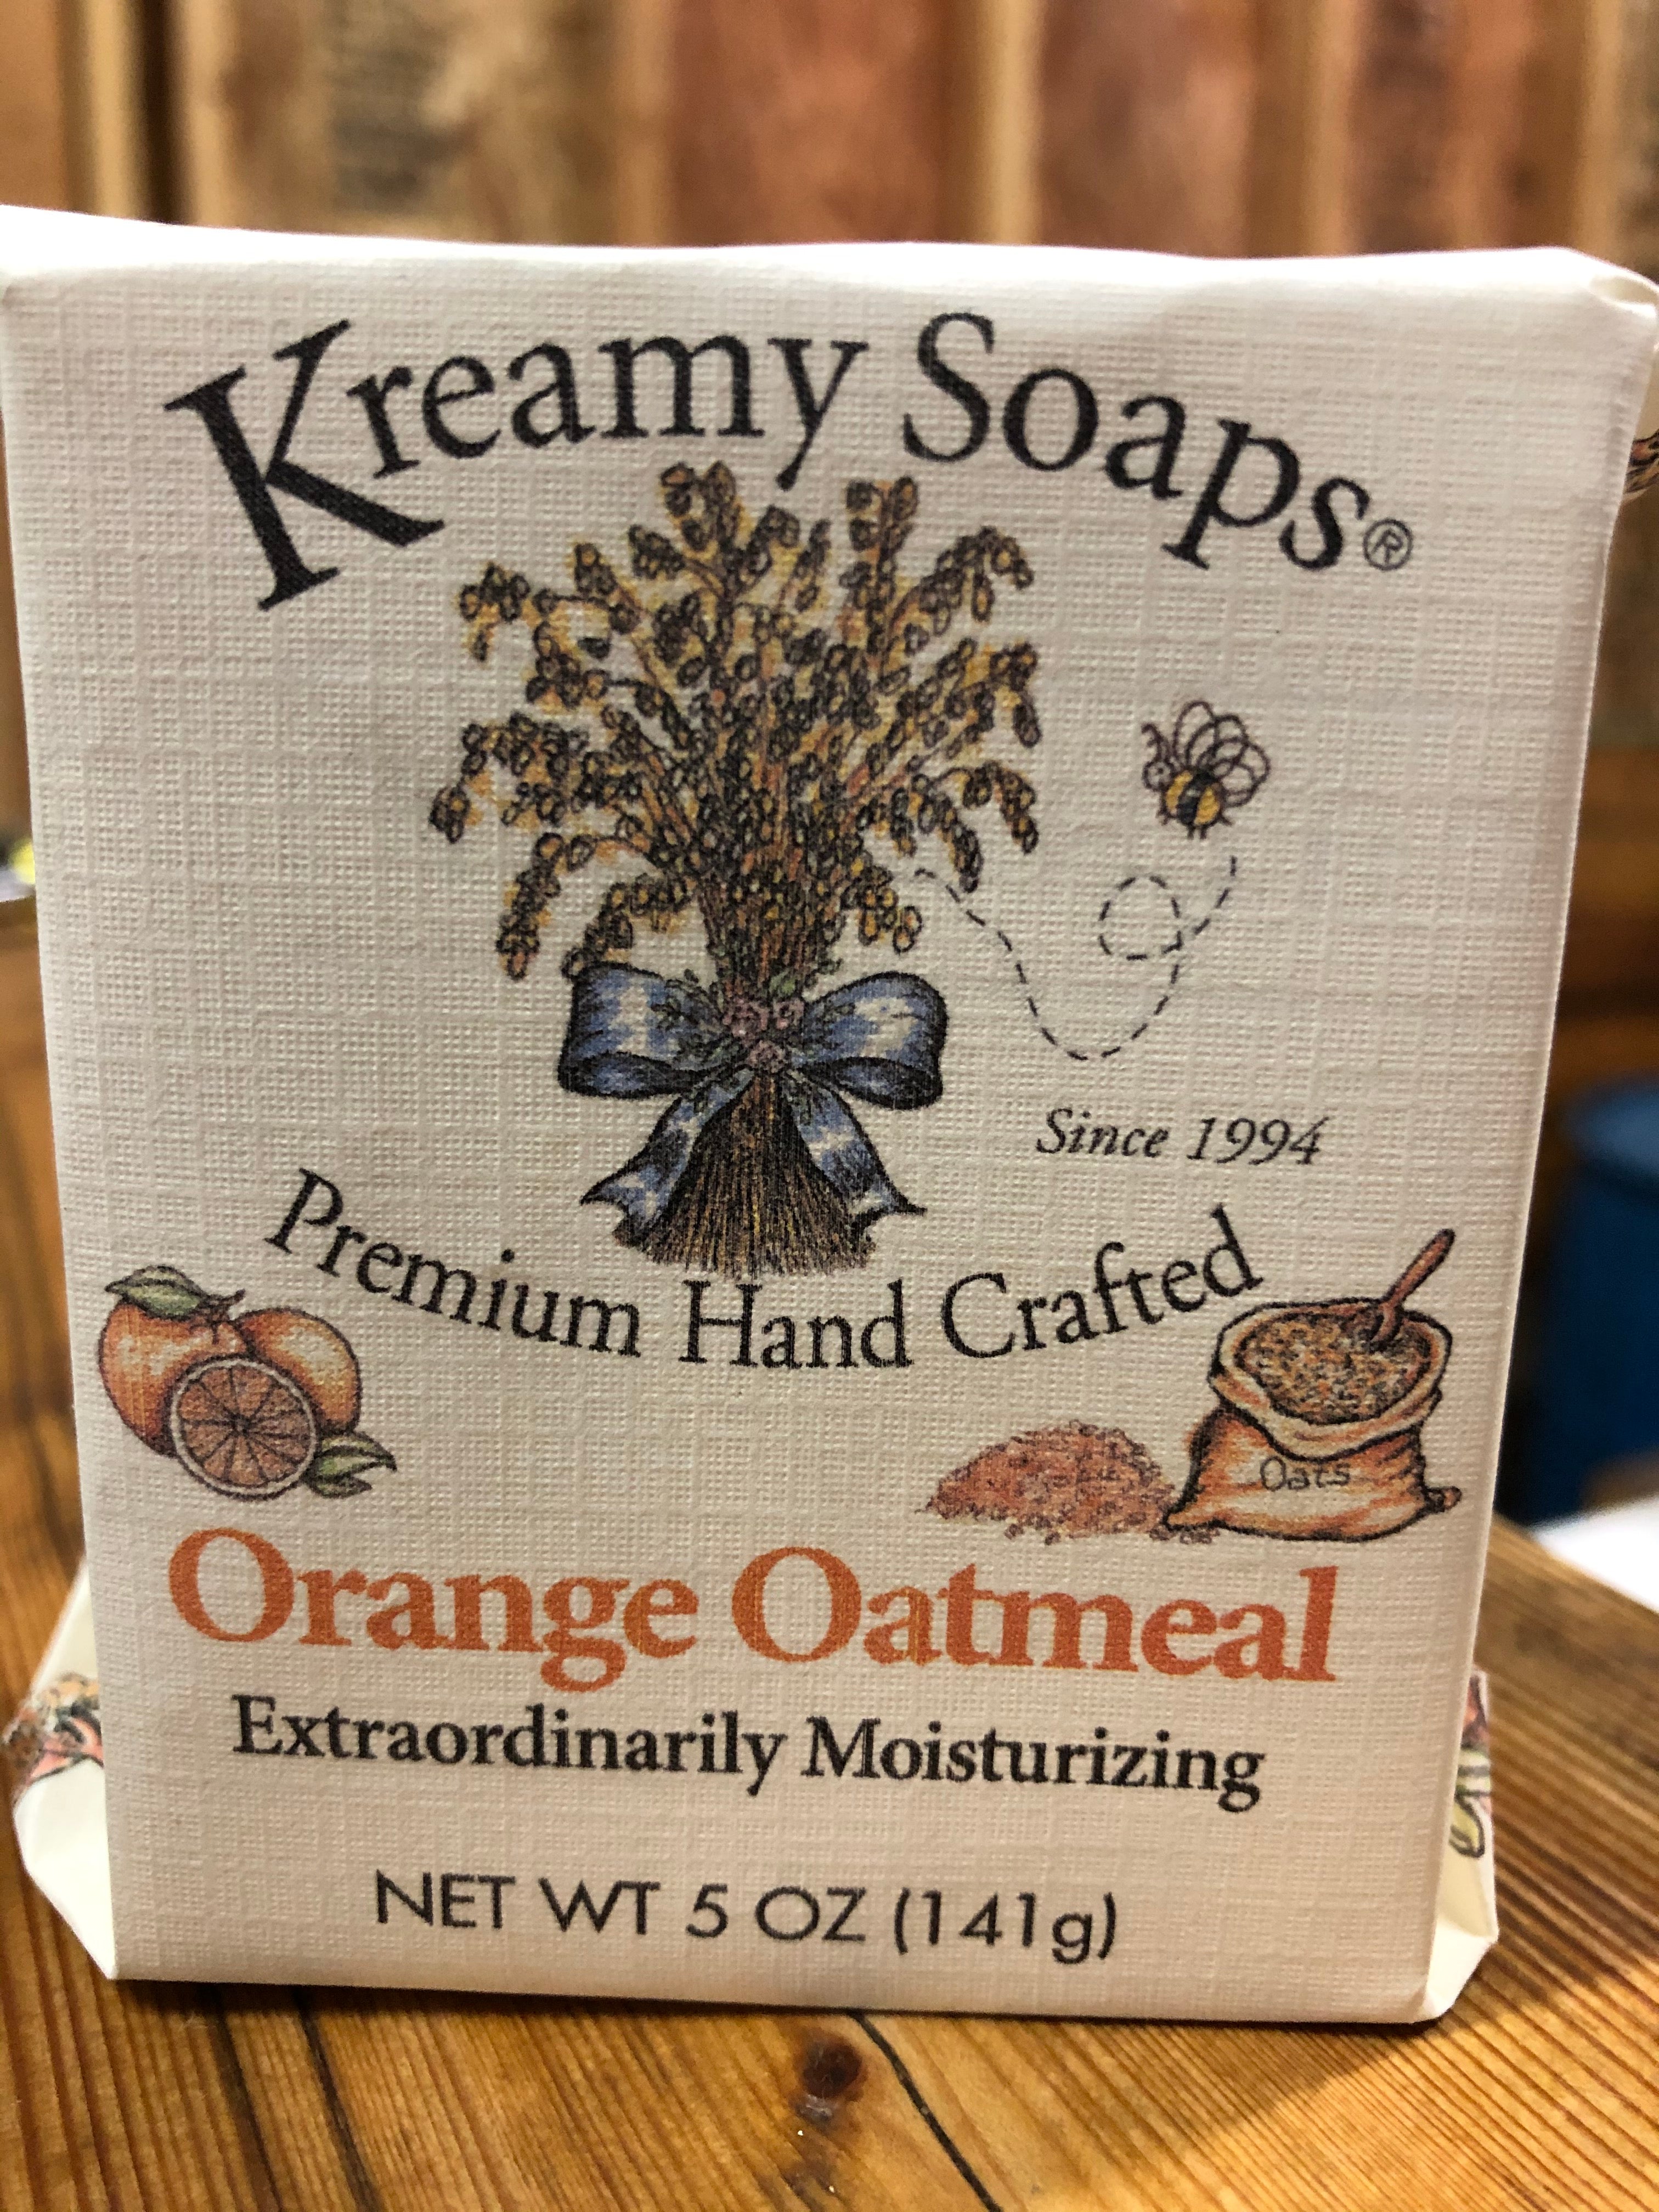 Orange Oatmeal - Kreamy Soaps